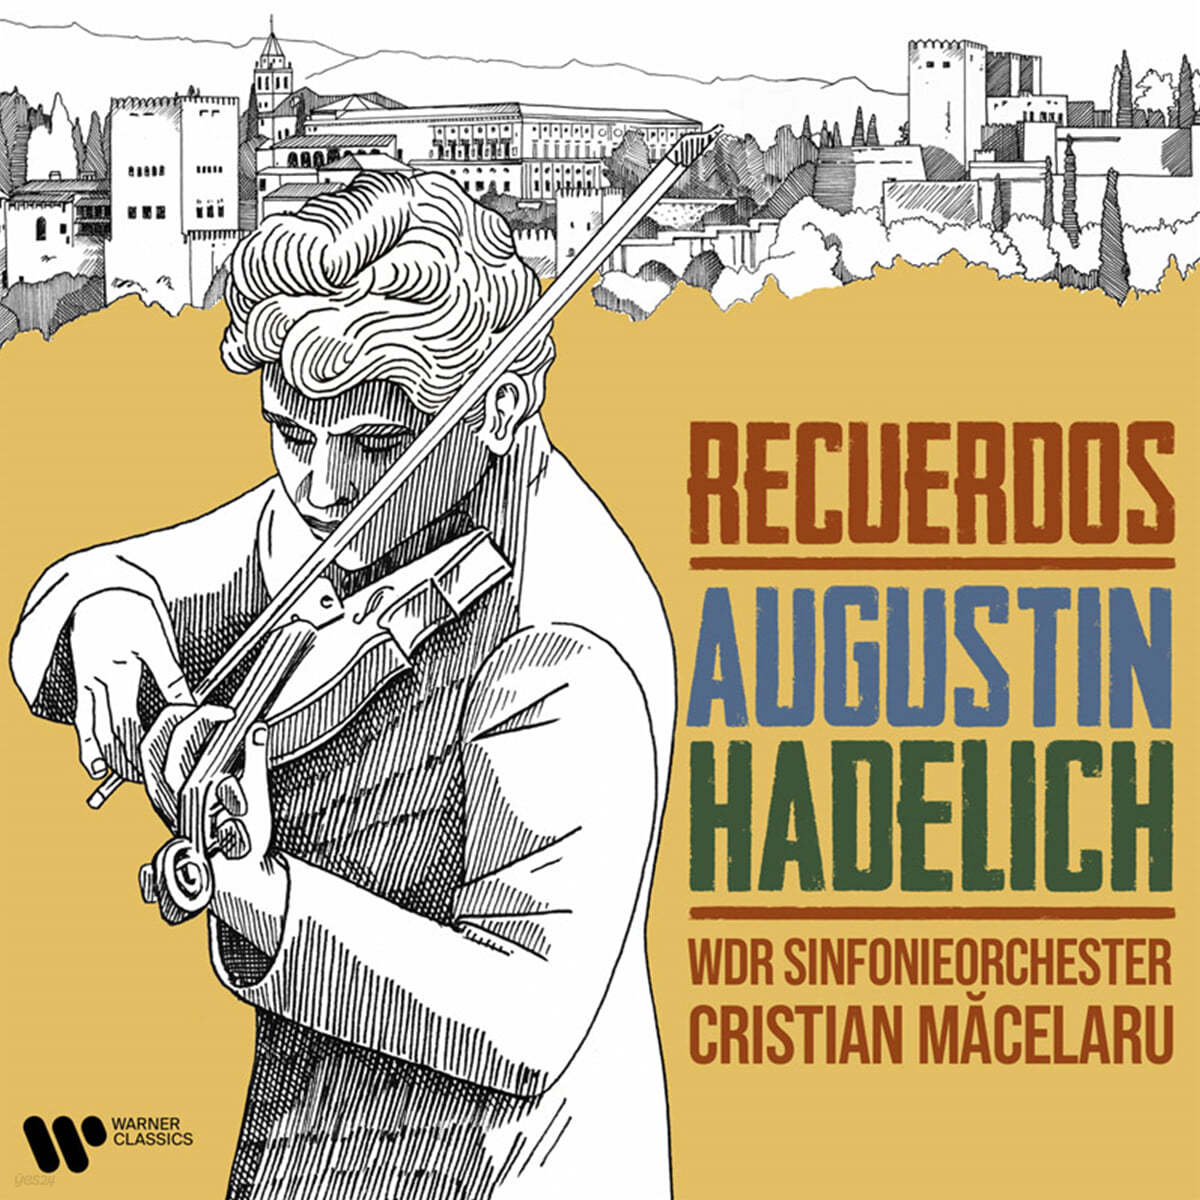 Augustin Hadelich 사라사테: 카르멘 환상곡 / 프로코피에프, 브리튼: 바이올린 협주곡 - 아우구스틴 하델리히 (Recuerdos)